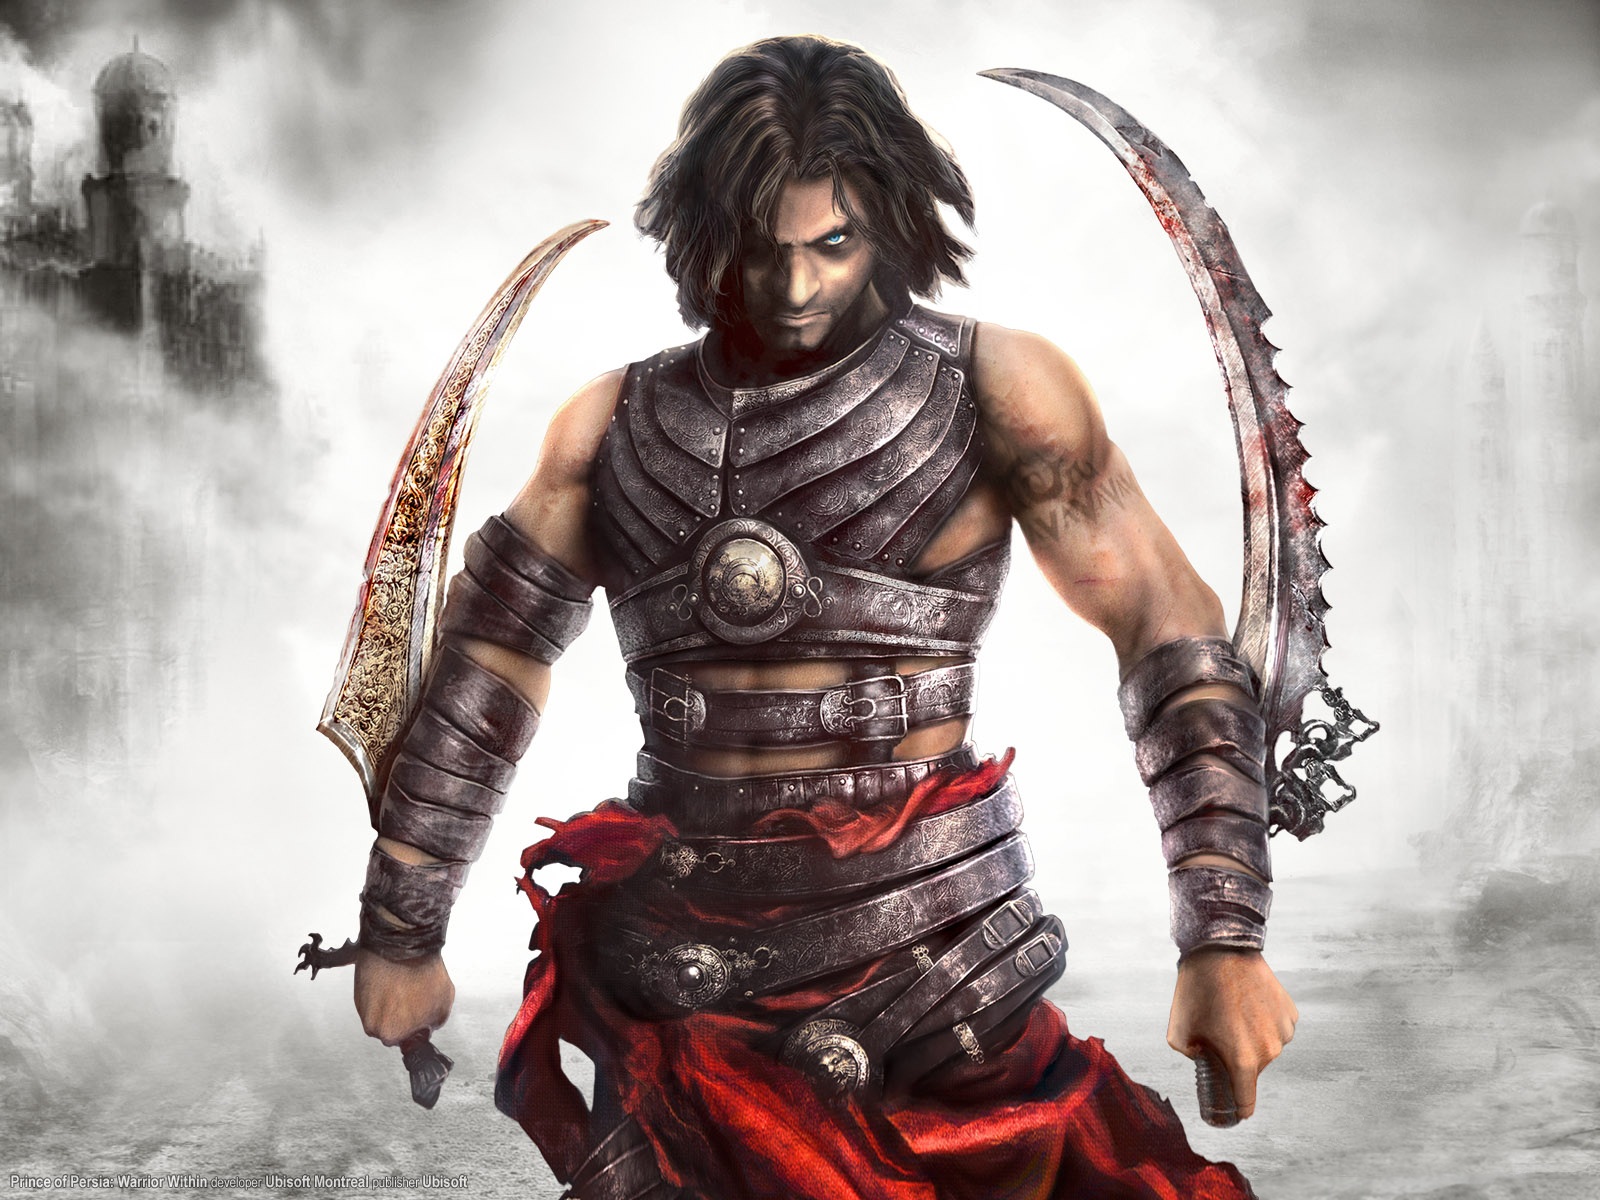 "Prince of Persia: Warrior Within (Video Game)" desktop wallpaper (1600 x 1200 pixels)